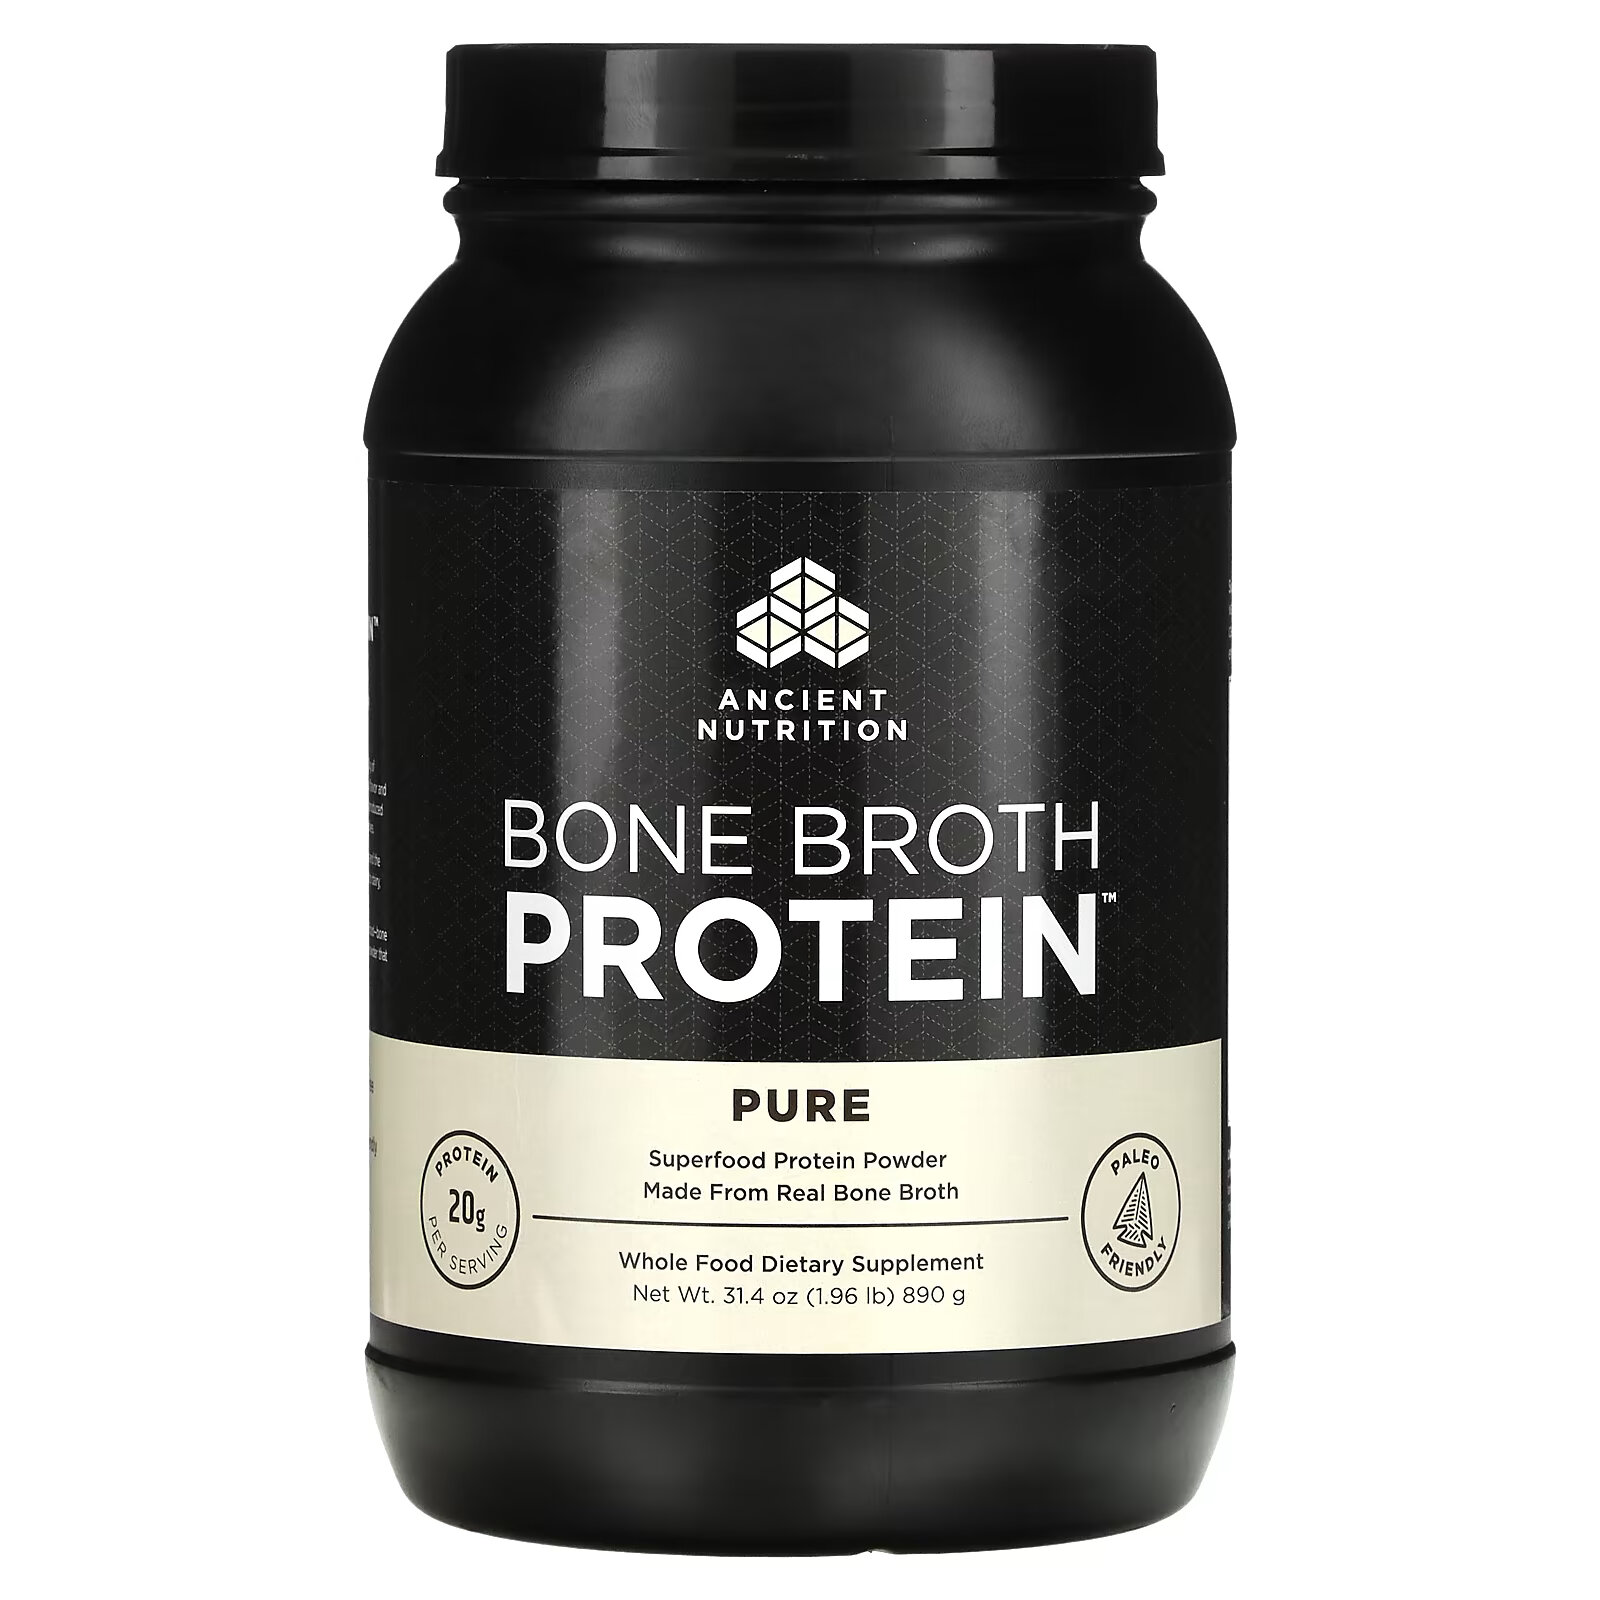 Dr. Axe / Ancient Nutrition, Bone Broth Protein, чистый белок, 890 г (1,96 фунта) dr axe ancient nutrition bone broth protein salted caramel 1 18 lb 540 g